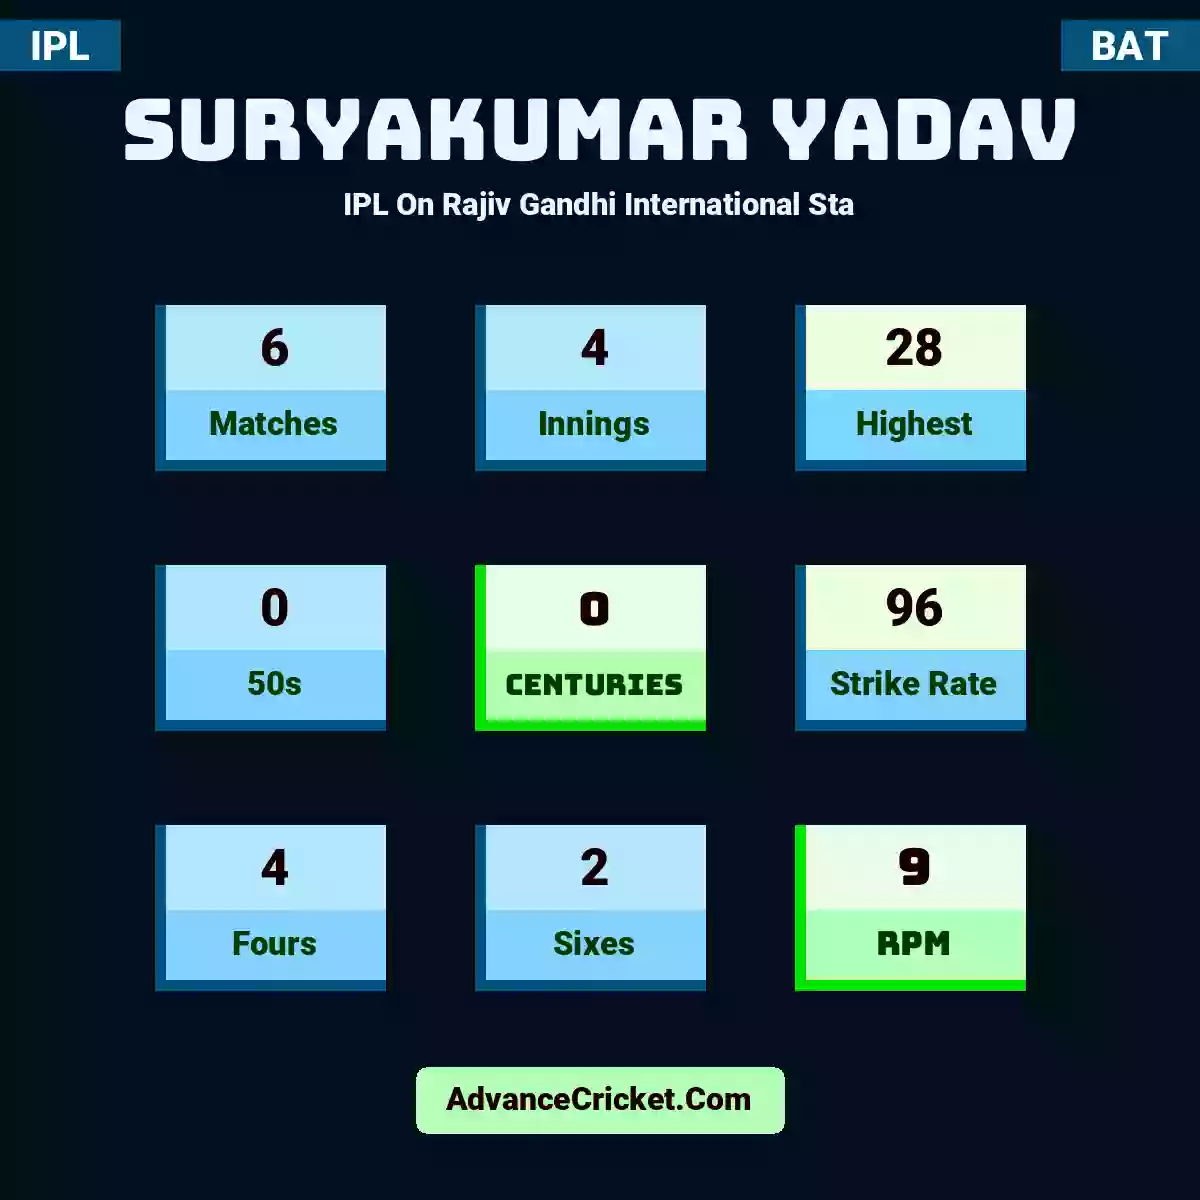 Suryakumar Yadav IPL  On Rajiv Gandhi International Sta, Suryakumar Yadav played 6 matches, scored 28 runs as highest, 0 half-centuries, and 0 centuries, with a strike rate of 96. S.Yadav hit 4 fours and 2 sixes, with an RPM of 9.